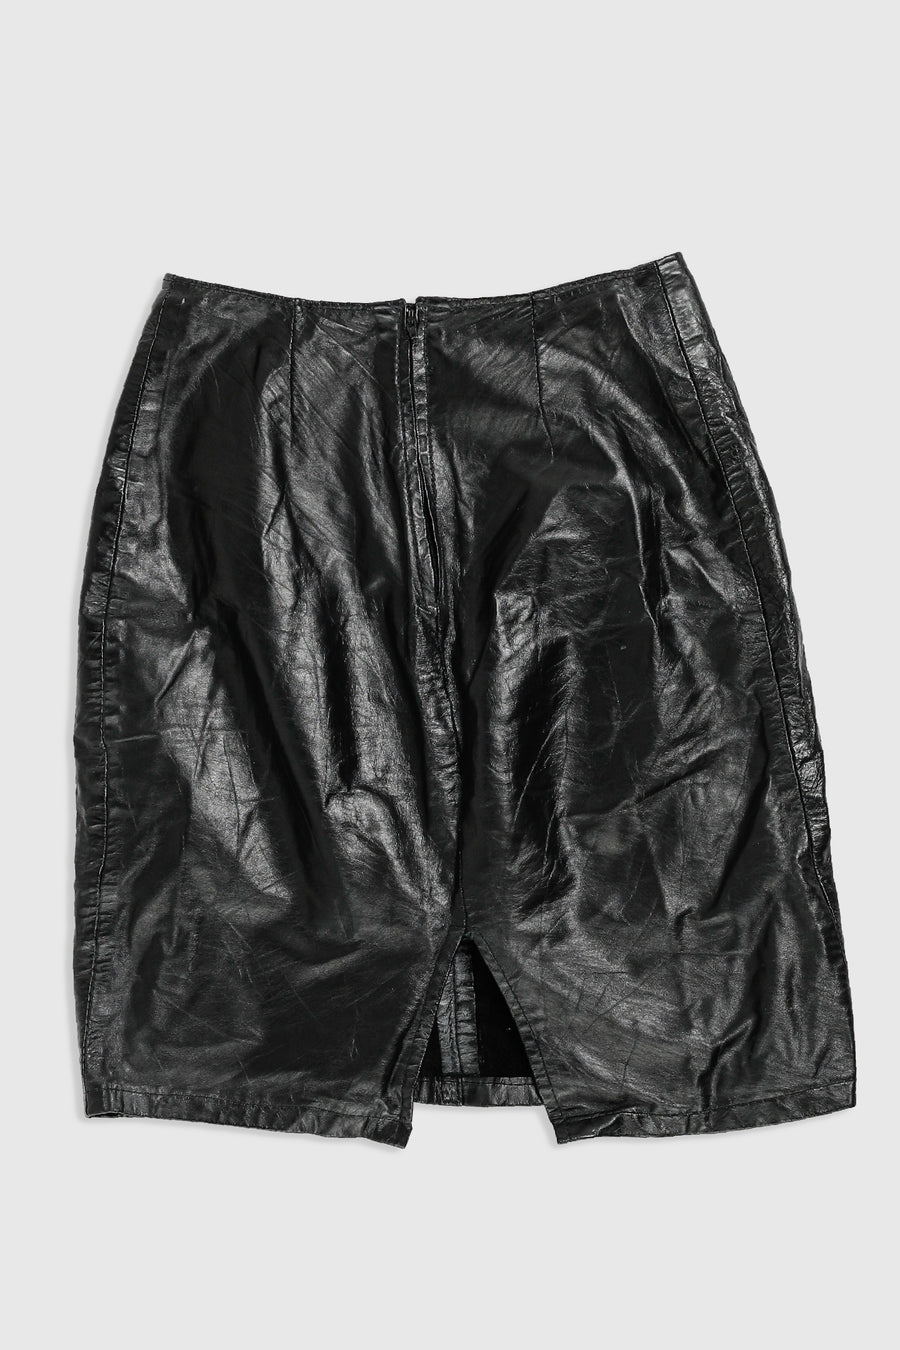 Vintage Leather Skirt - Women's S